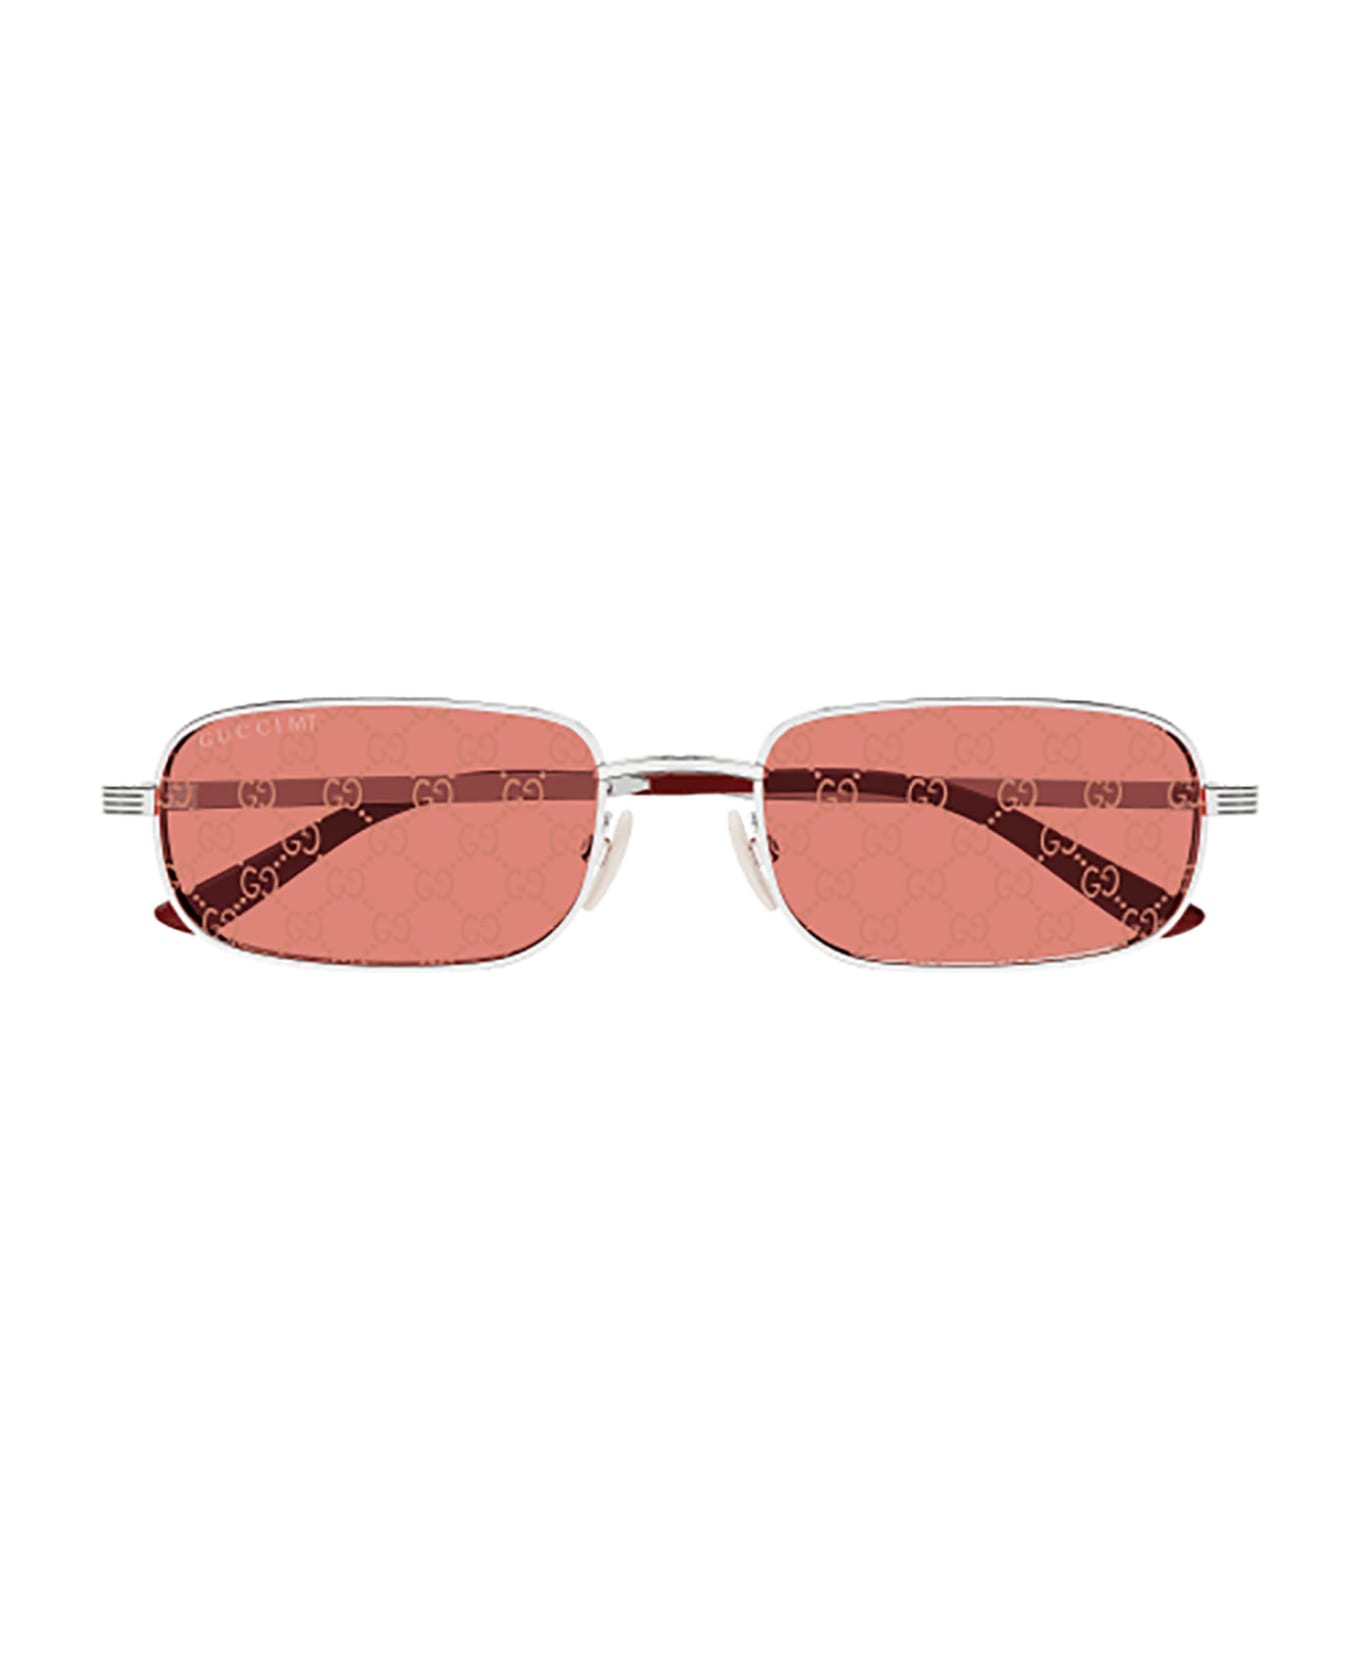 Gucci Eyewear Gg1457s Sunglasses - 004 silver silver red